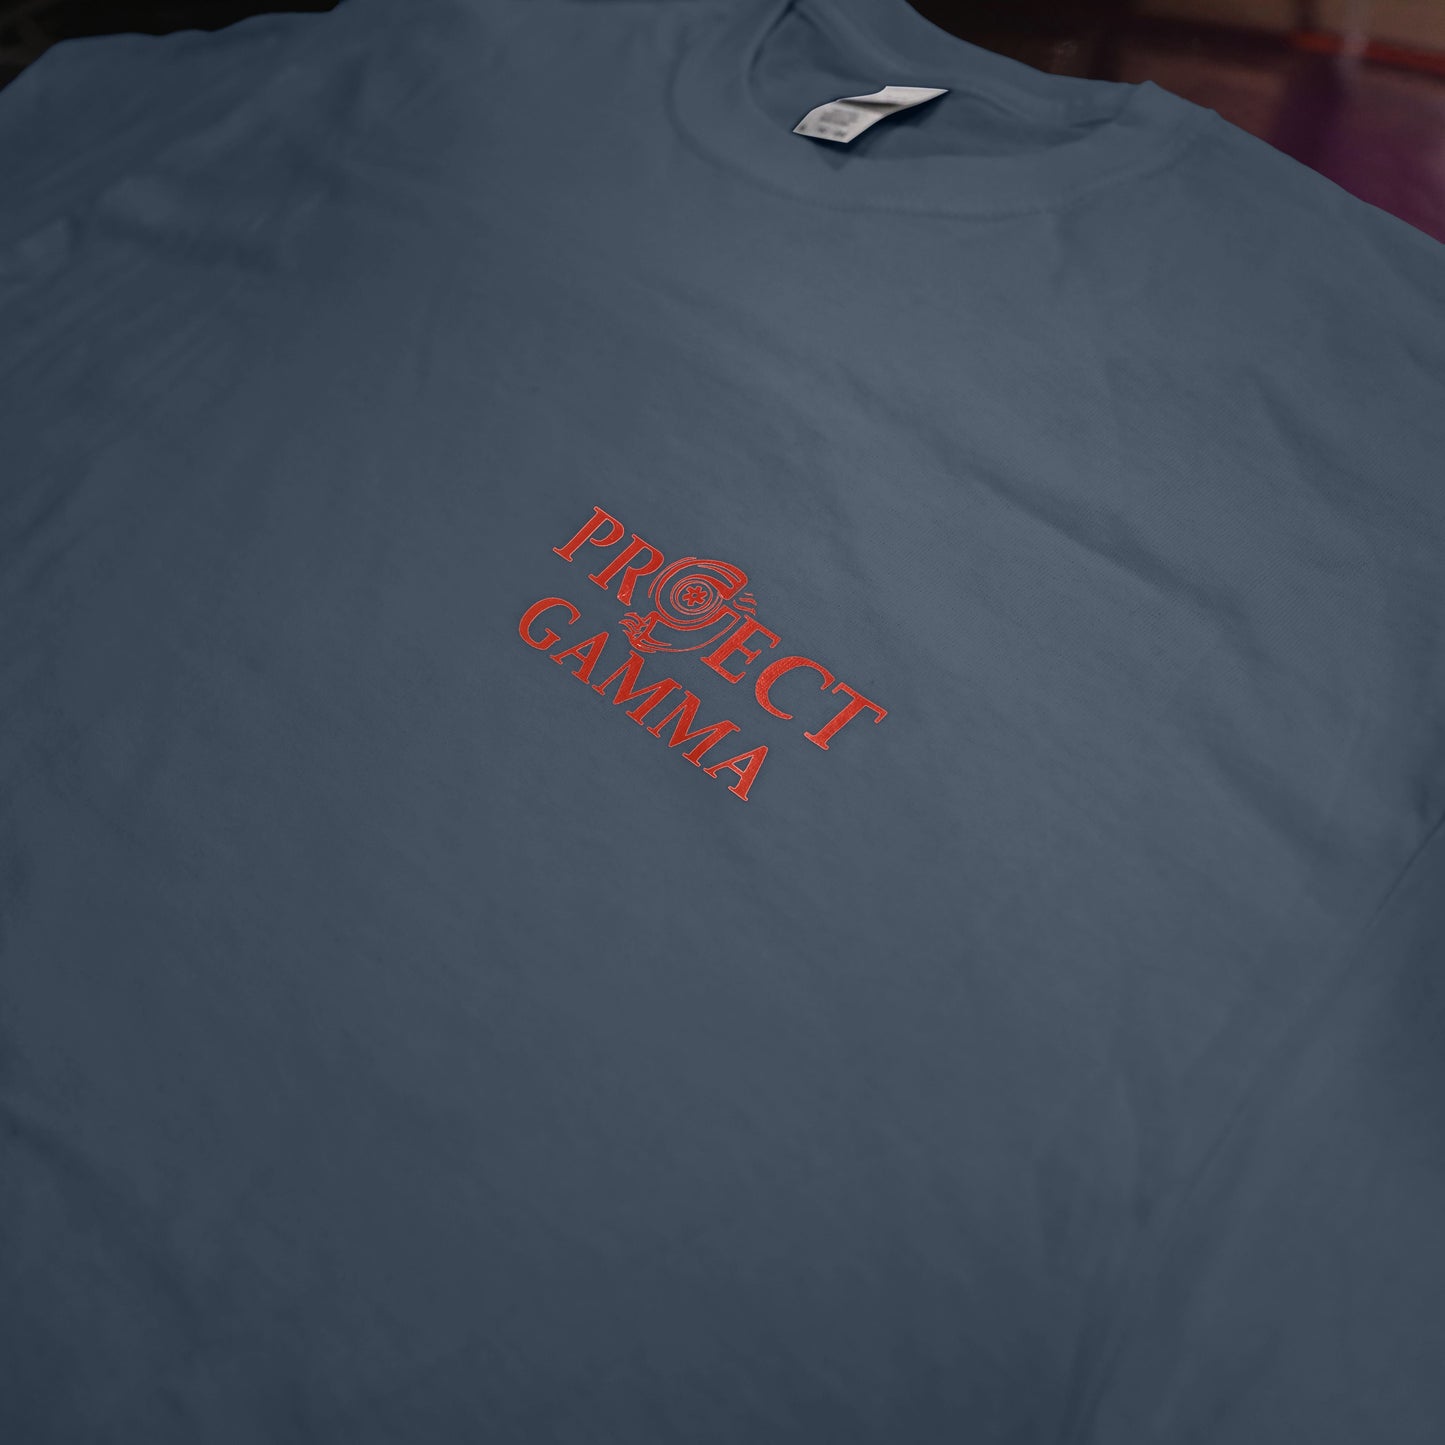 Project Gamma T-Shirt MER9724